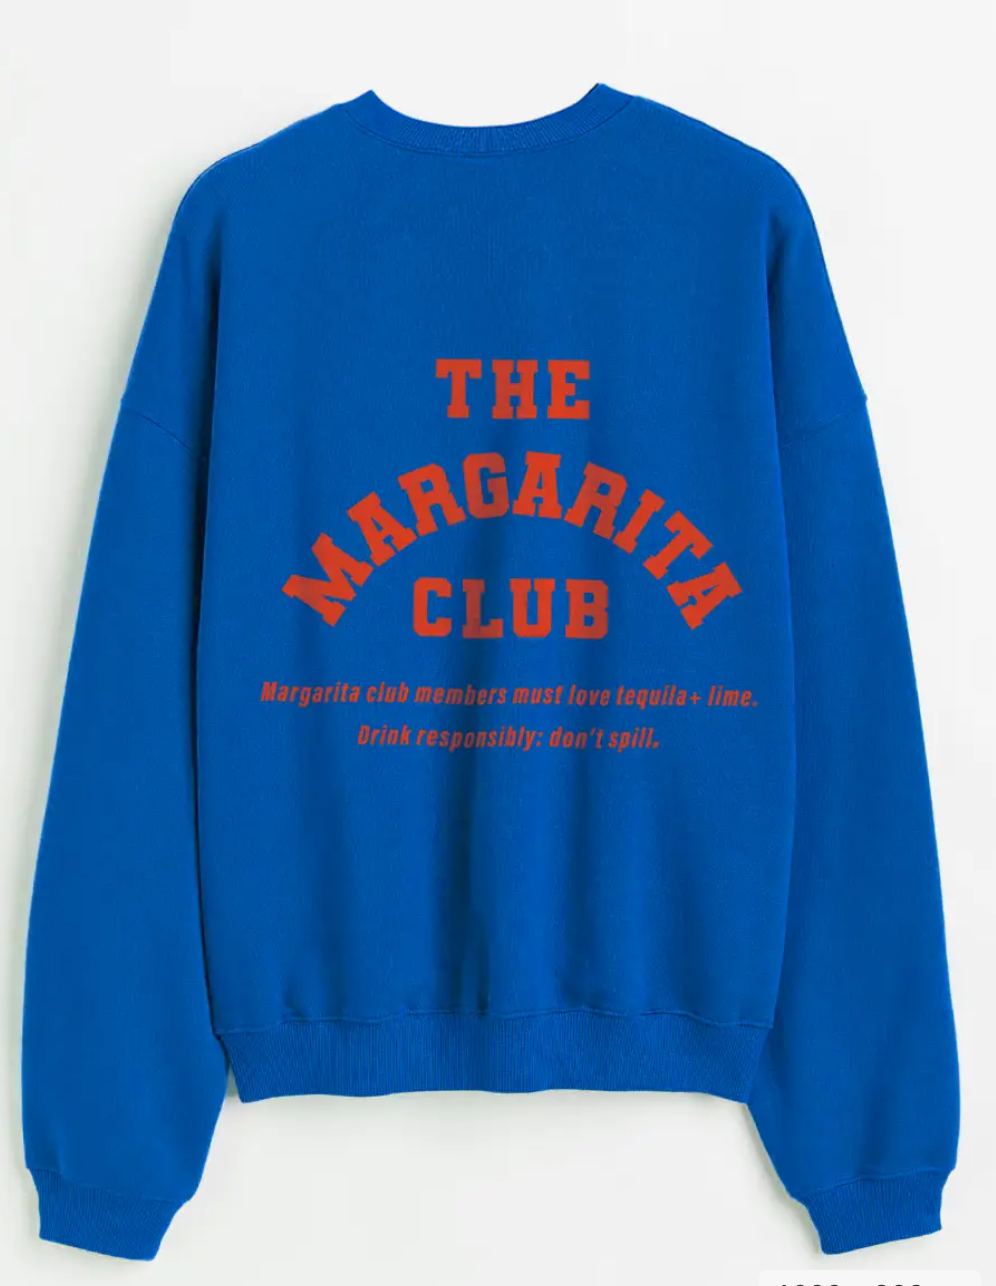 Margarita Club Member Sweatshirt - Royal Blue